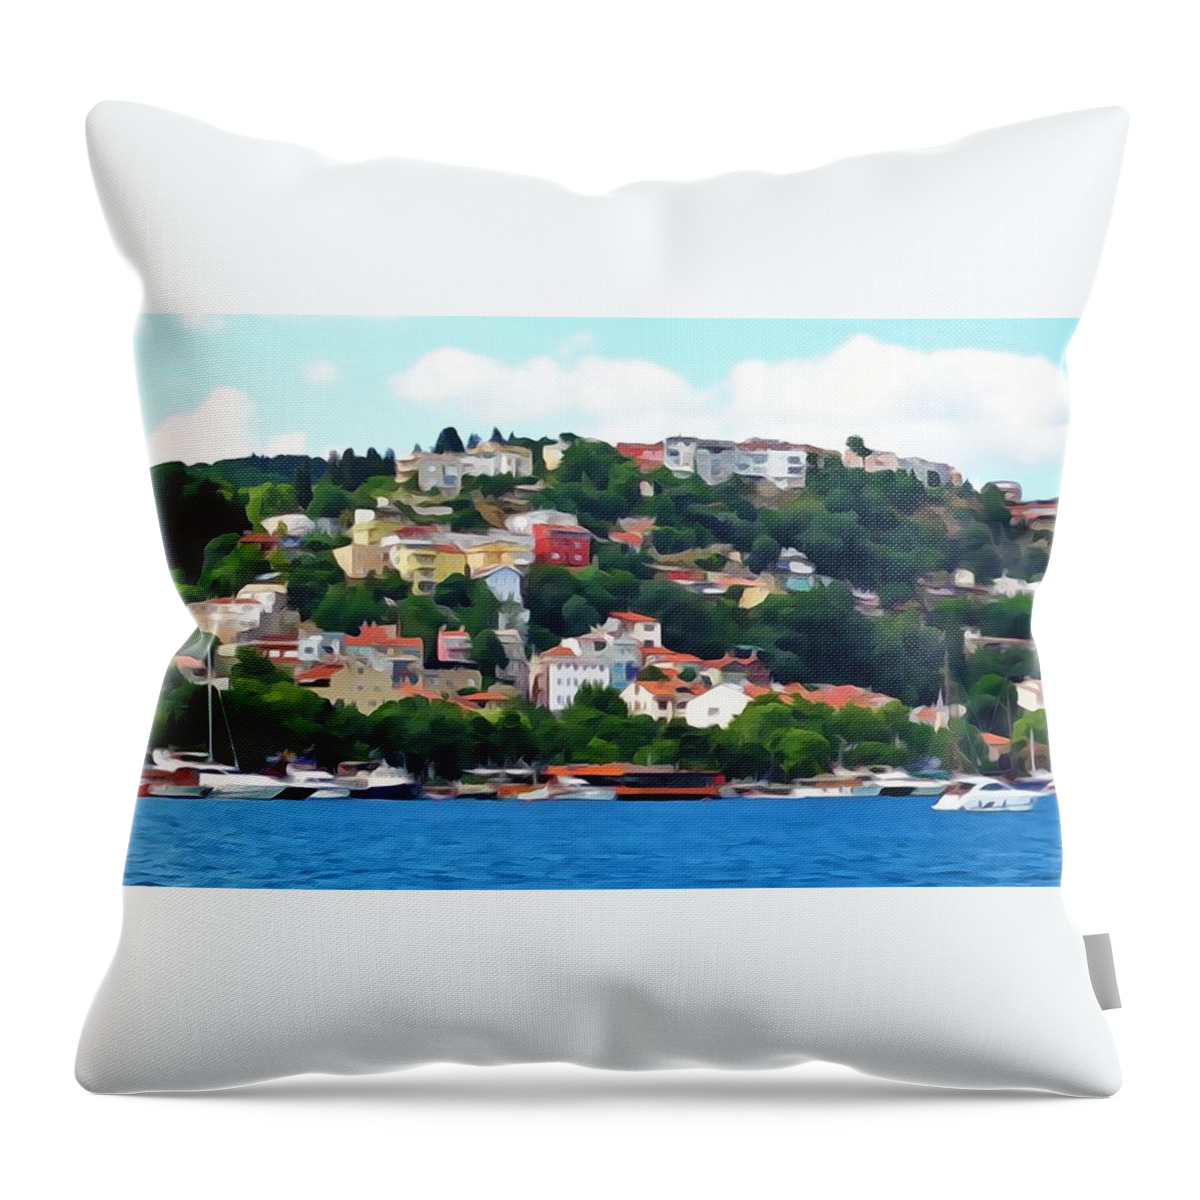 Bosphorus Throw Pillow featuring the photograph On the Bosphorus #4 by Lisa Dunn